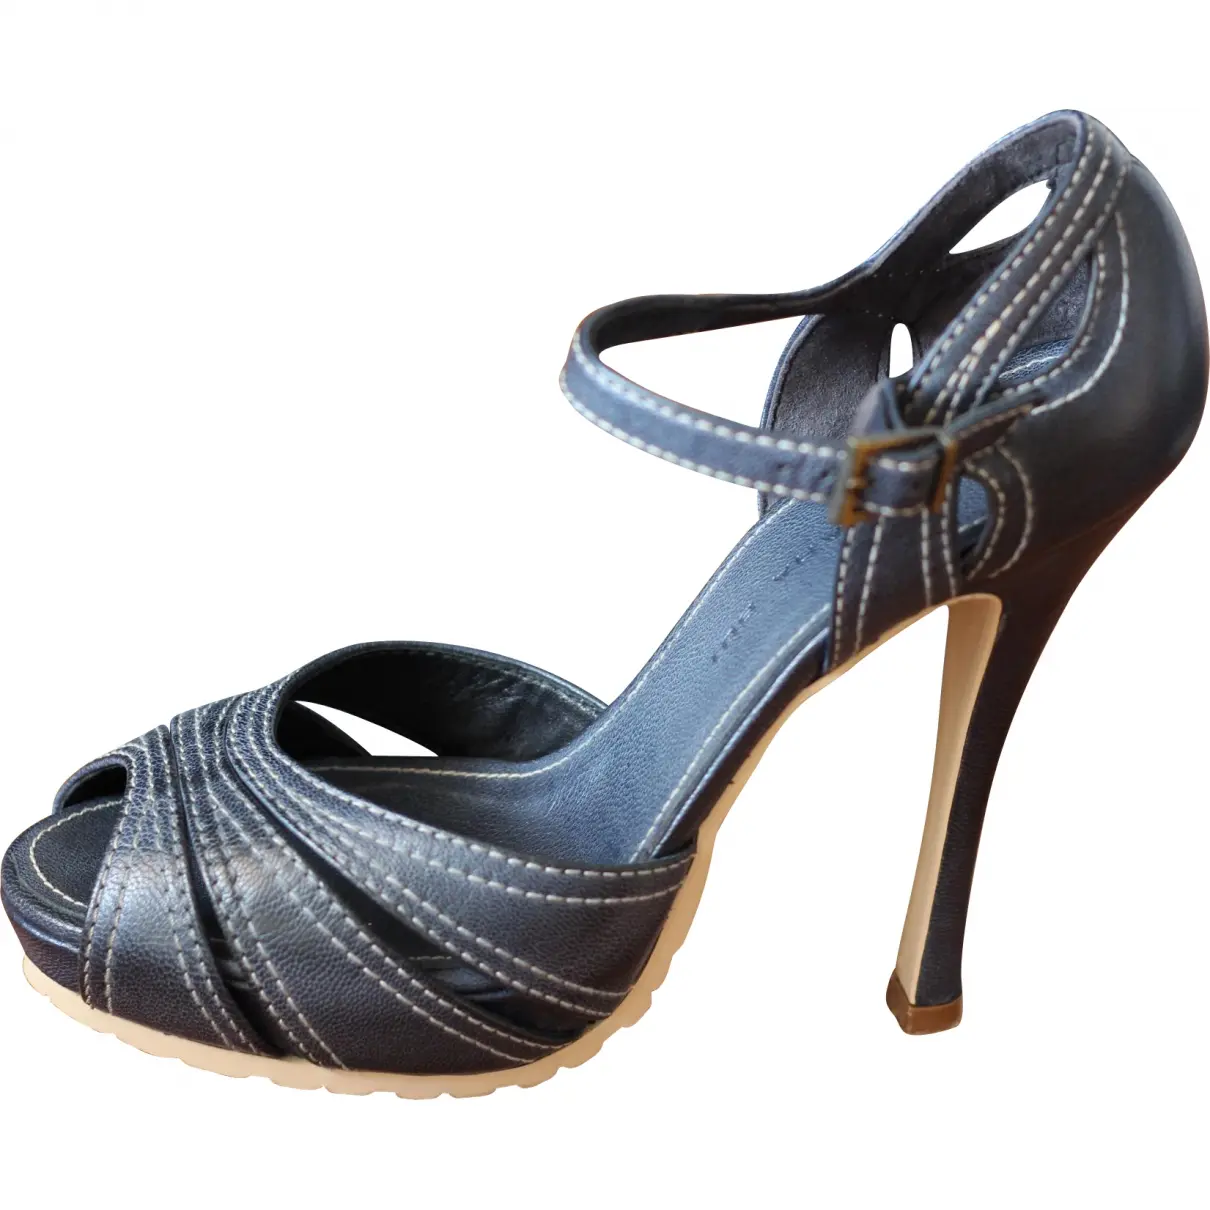 Blue Leather Heels Barbara Bui